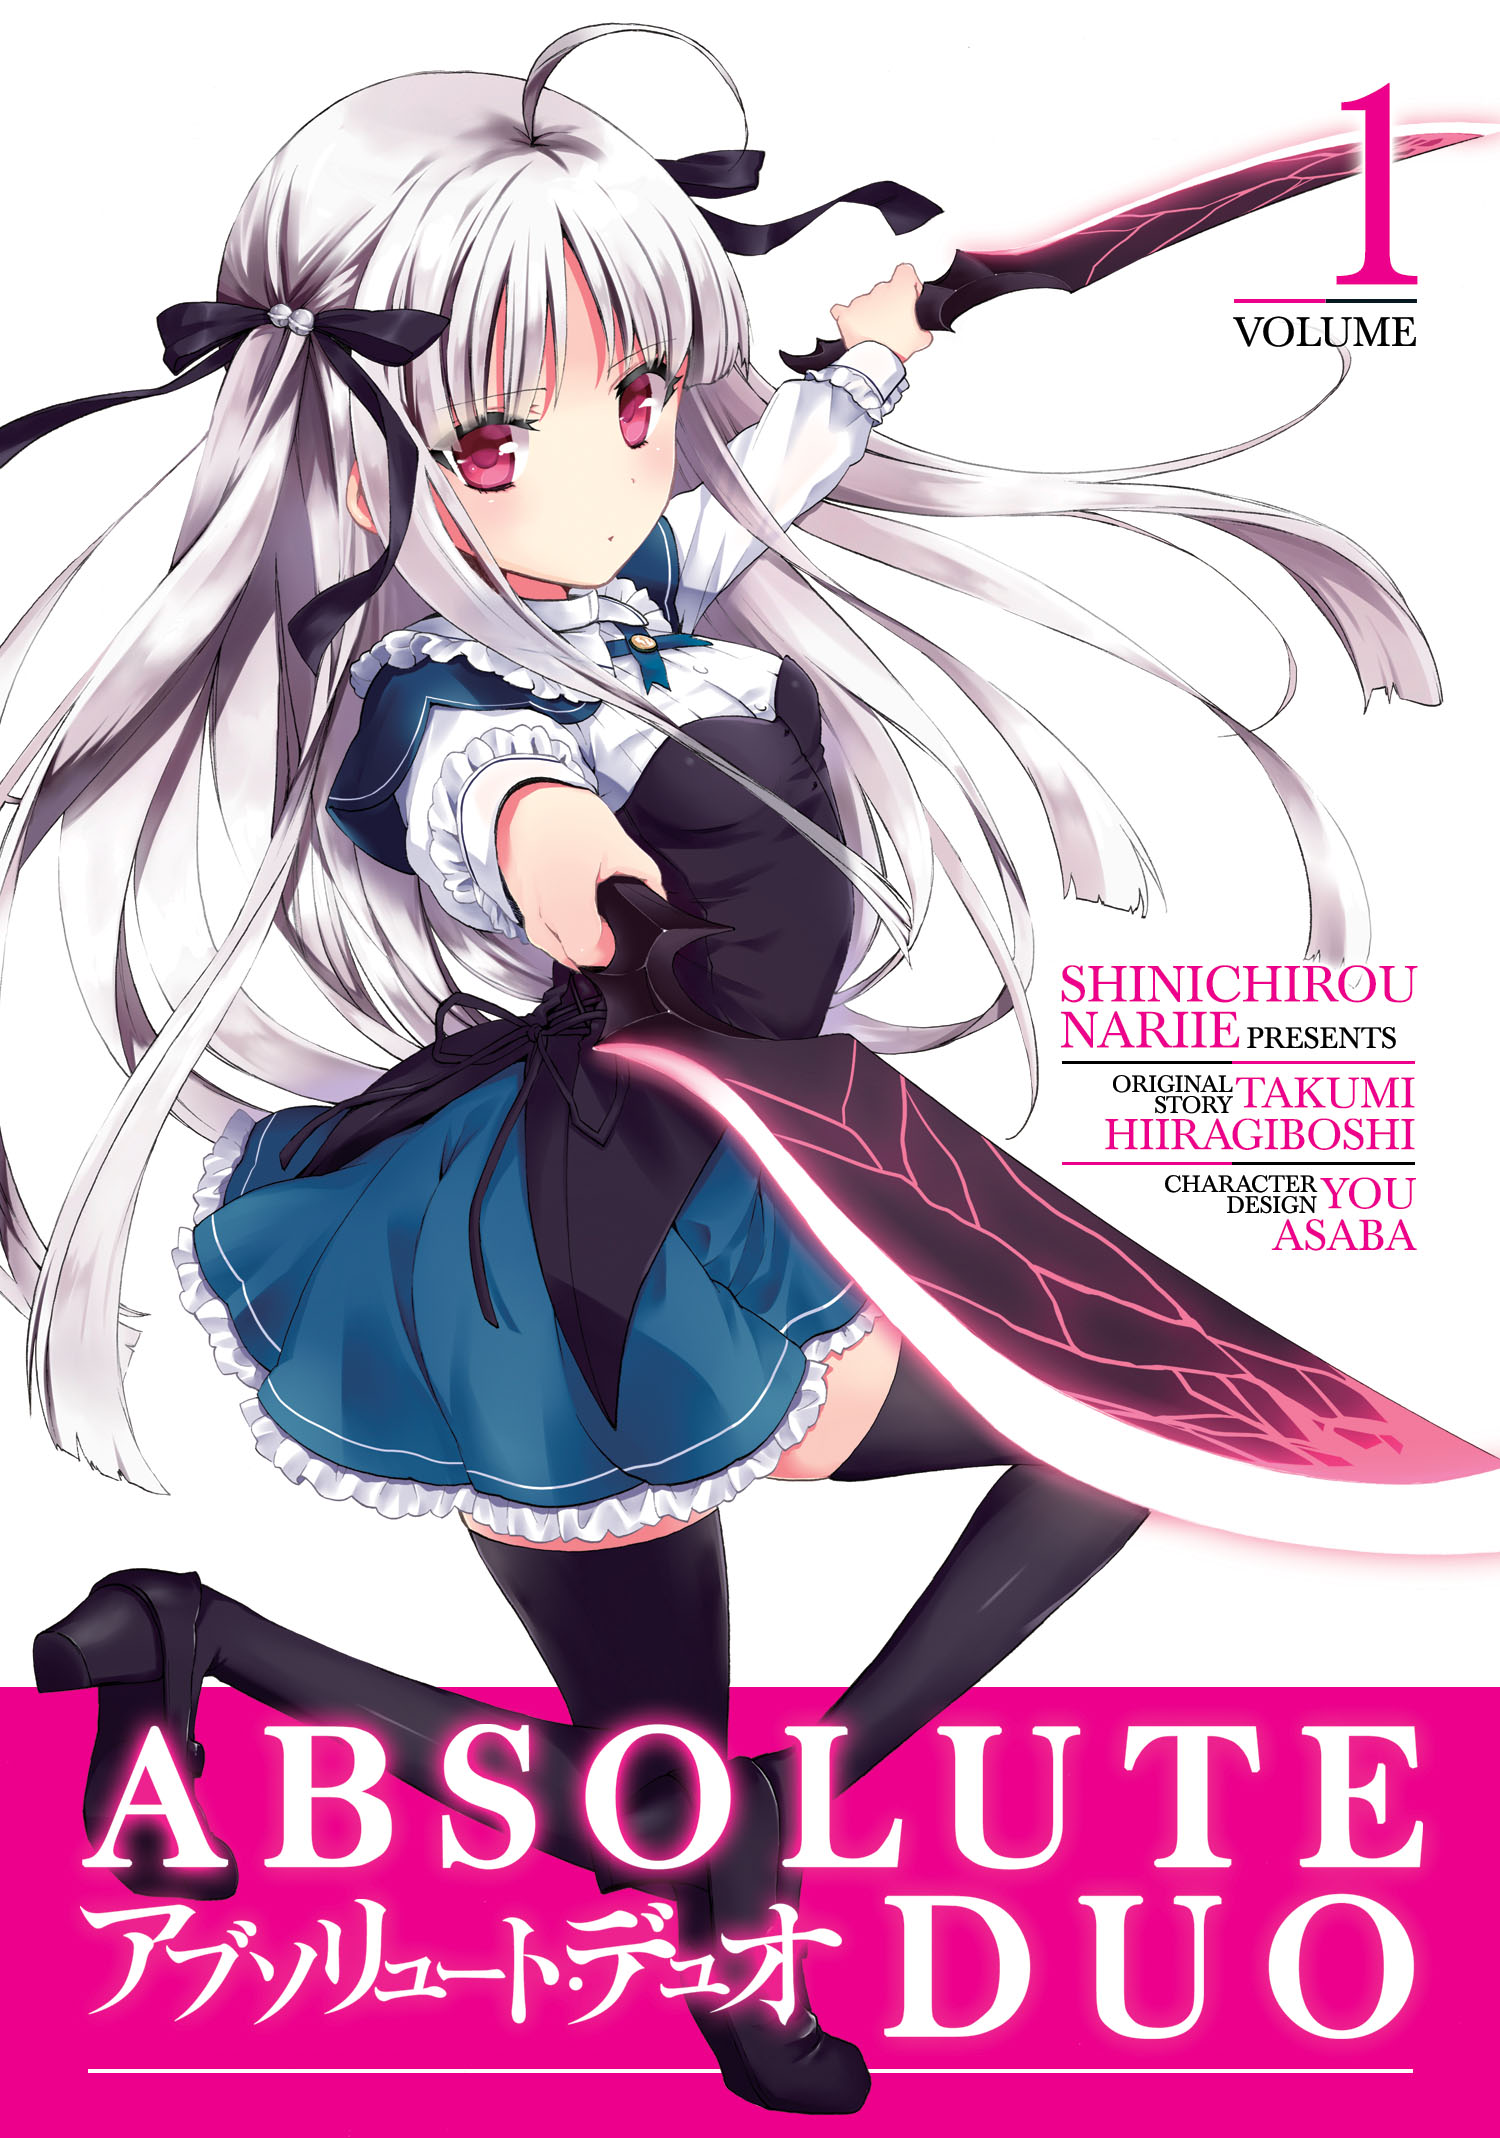 Anime Spotlight - Absolute Duo - Anime News Network